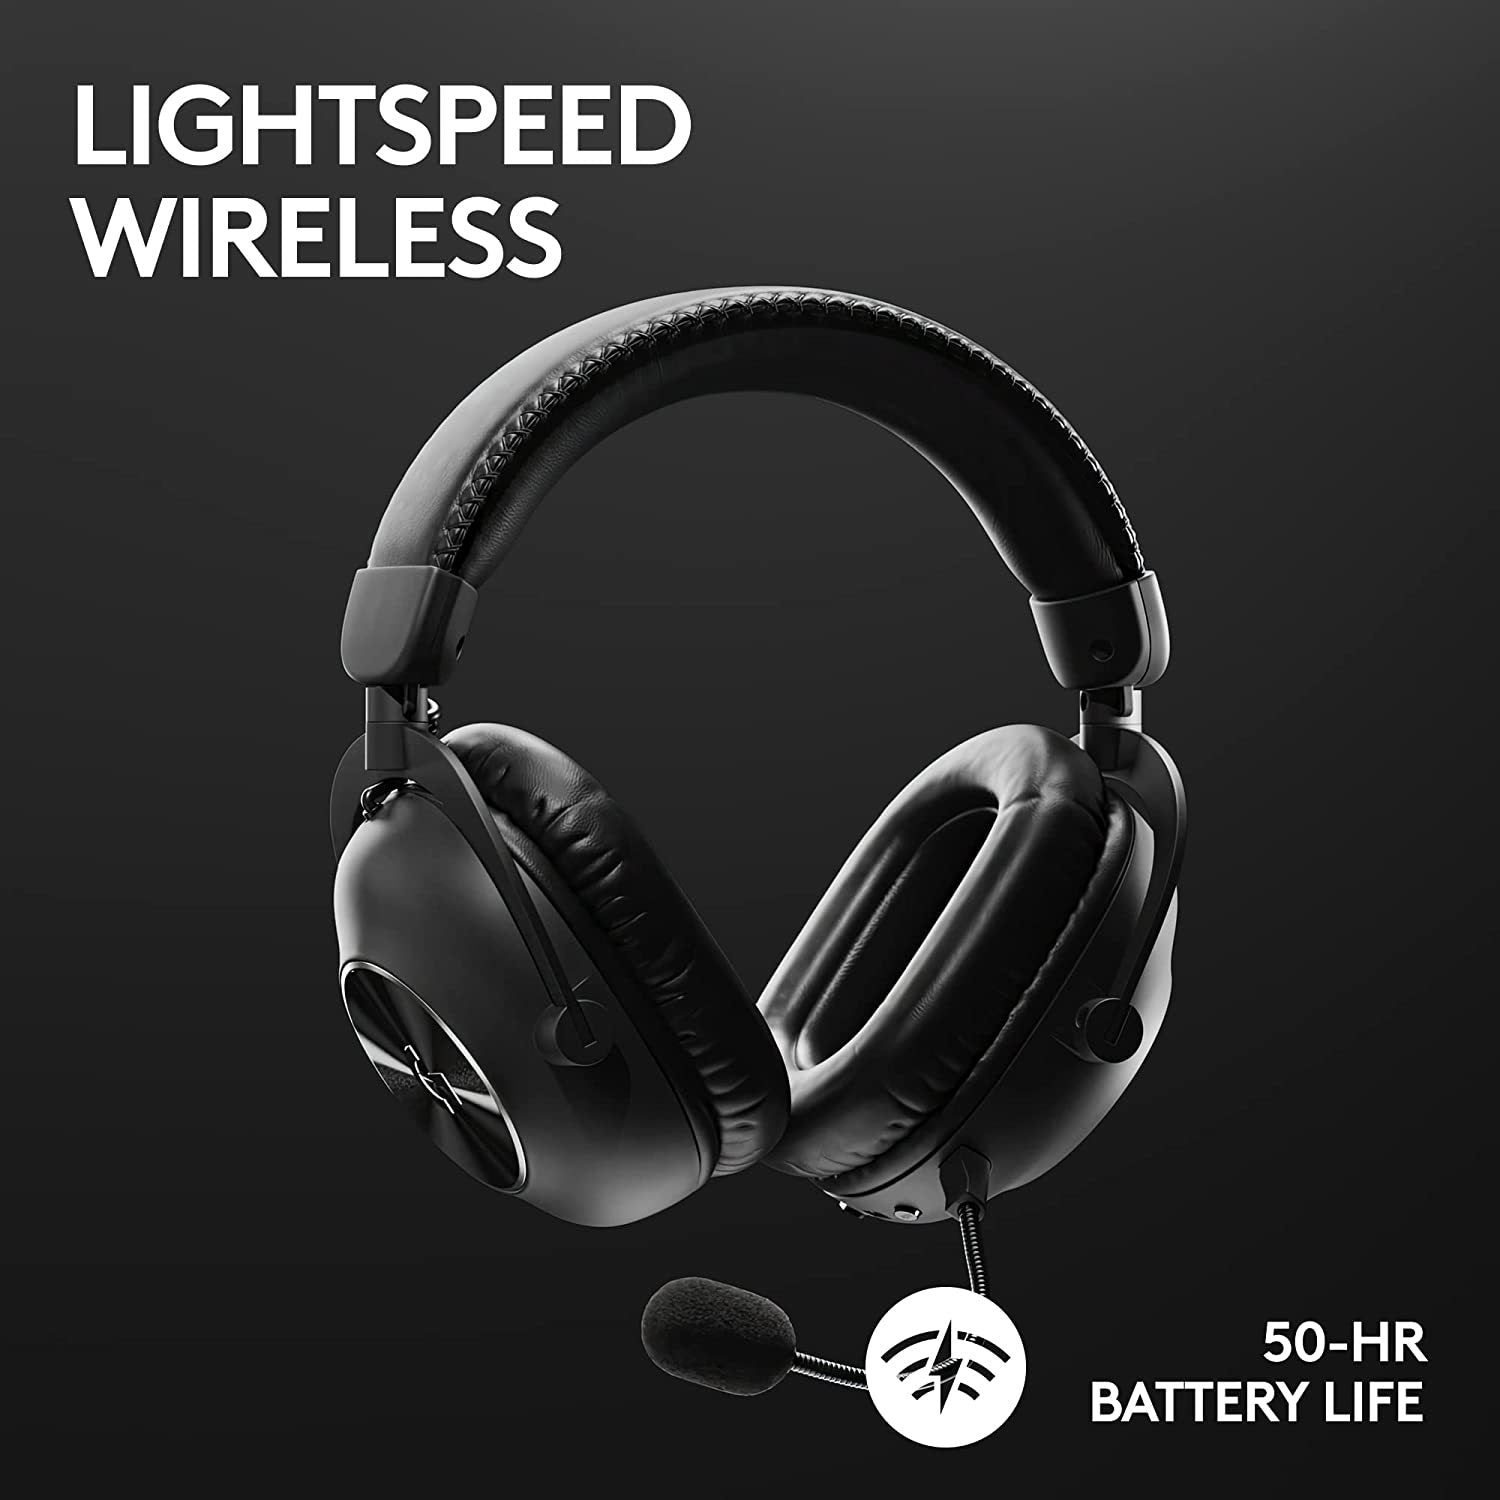 Logitech Pro X 2 Lightspeed Wireless Gaming Headset (Black)